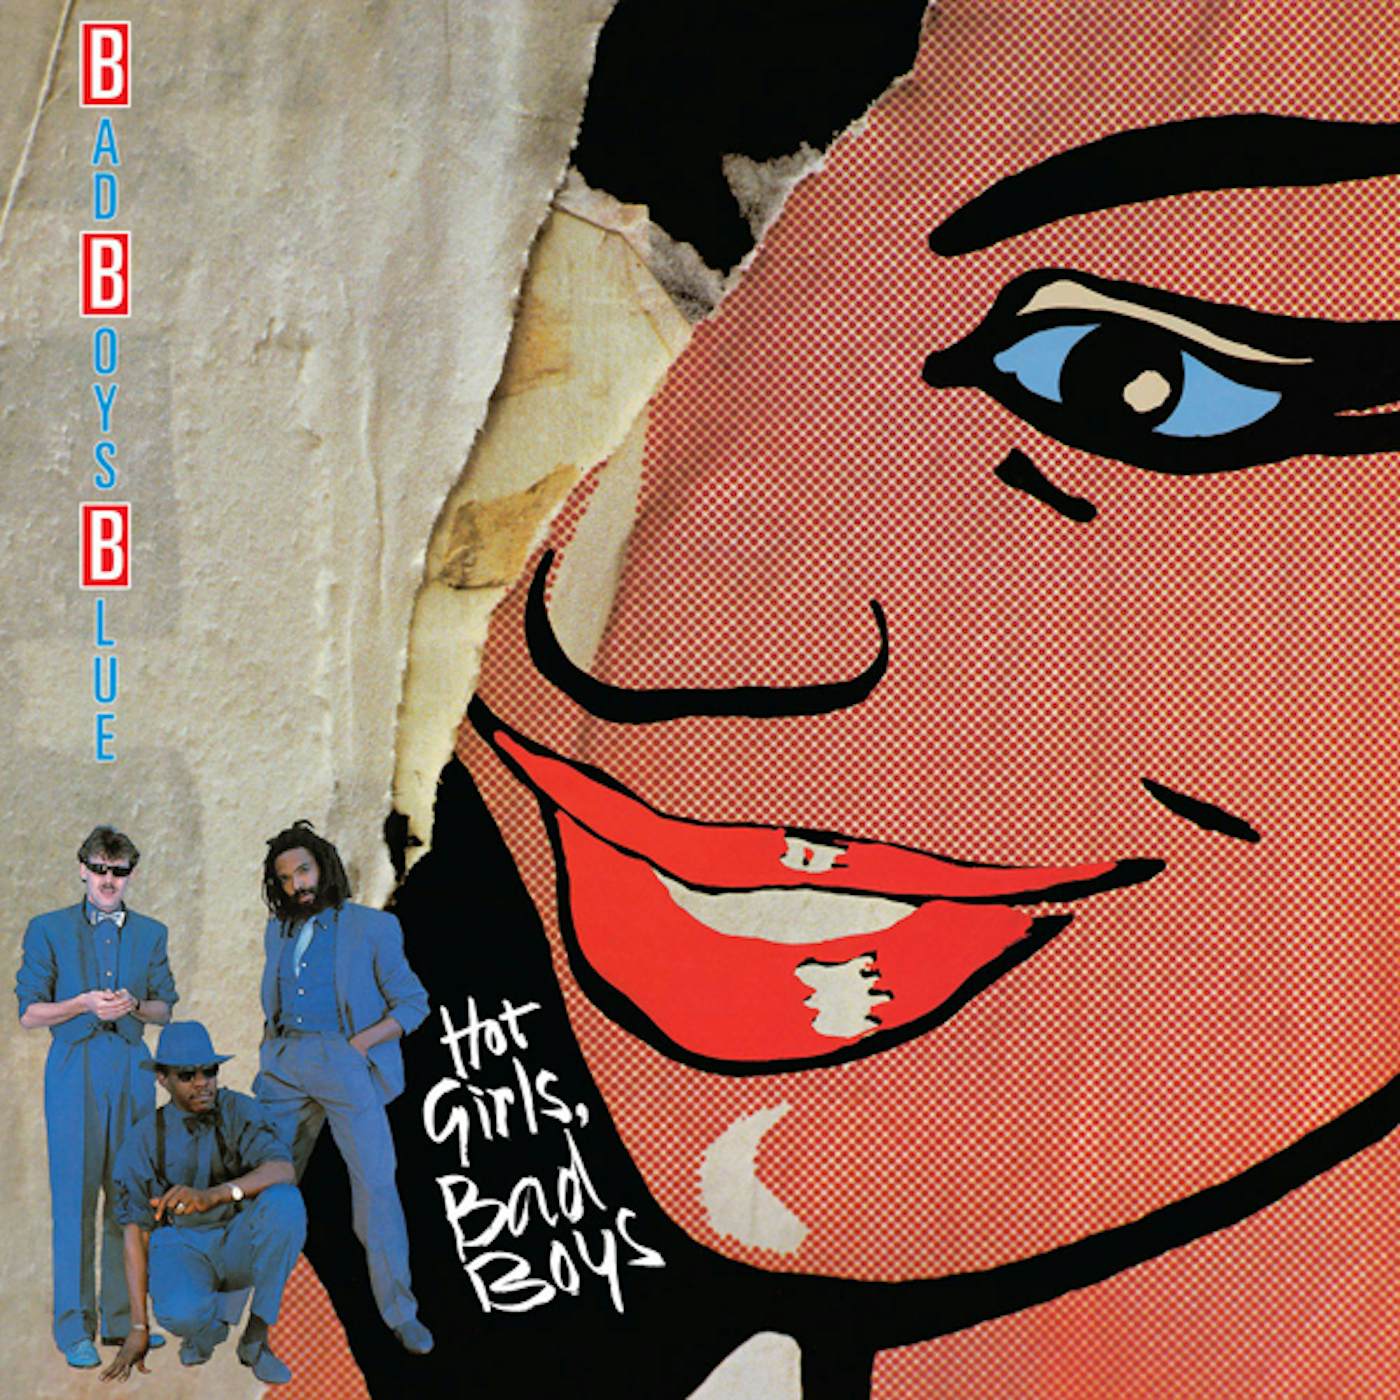 Bad Boys Blue HOT GIRLS BAD BOYS Vinyl Record